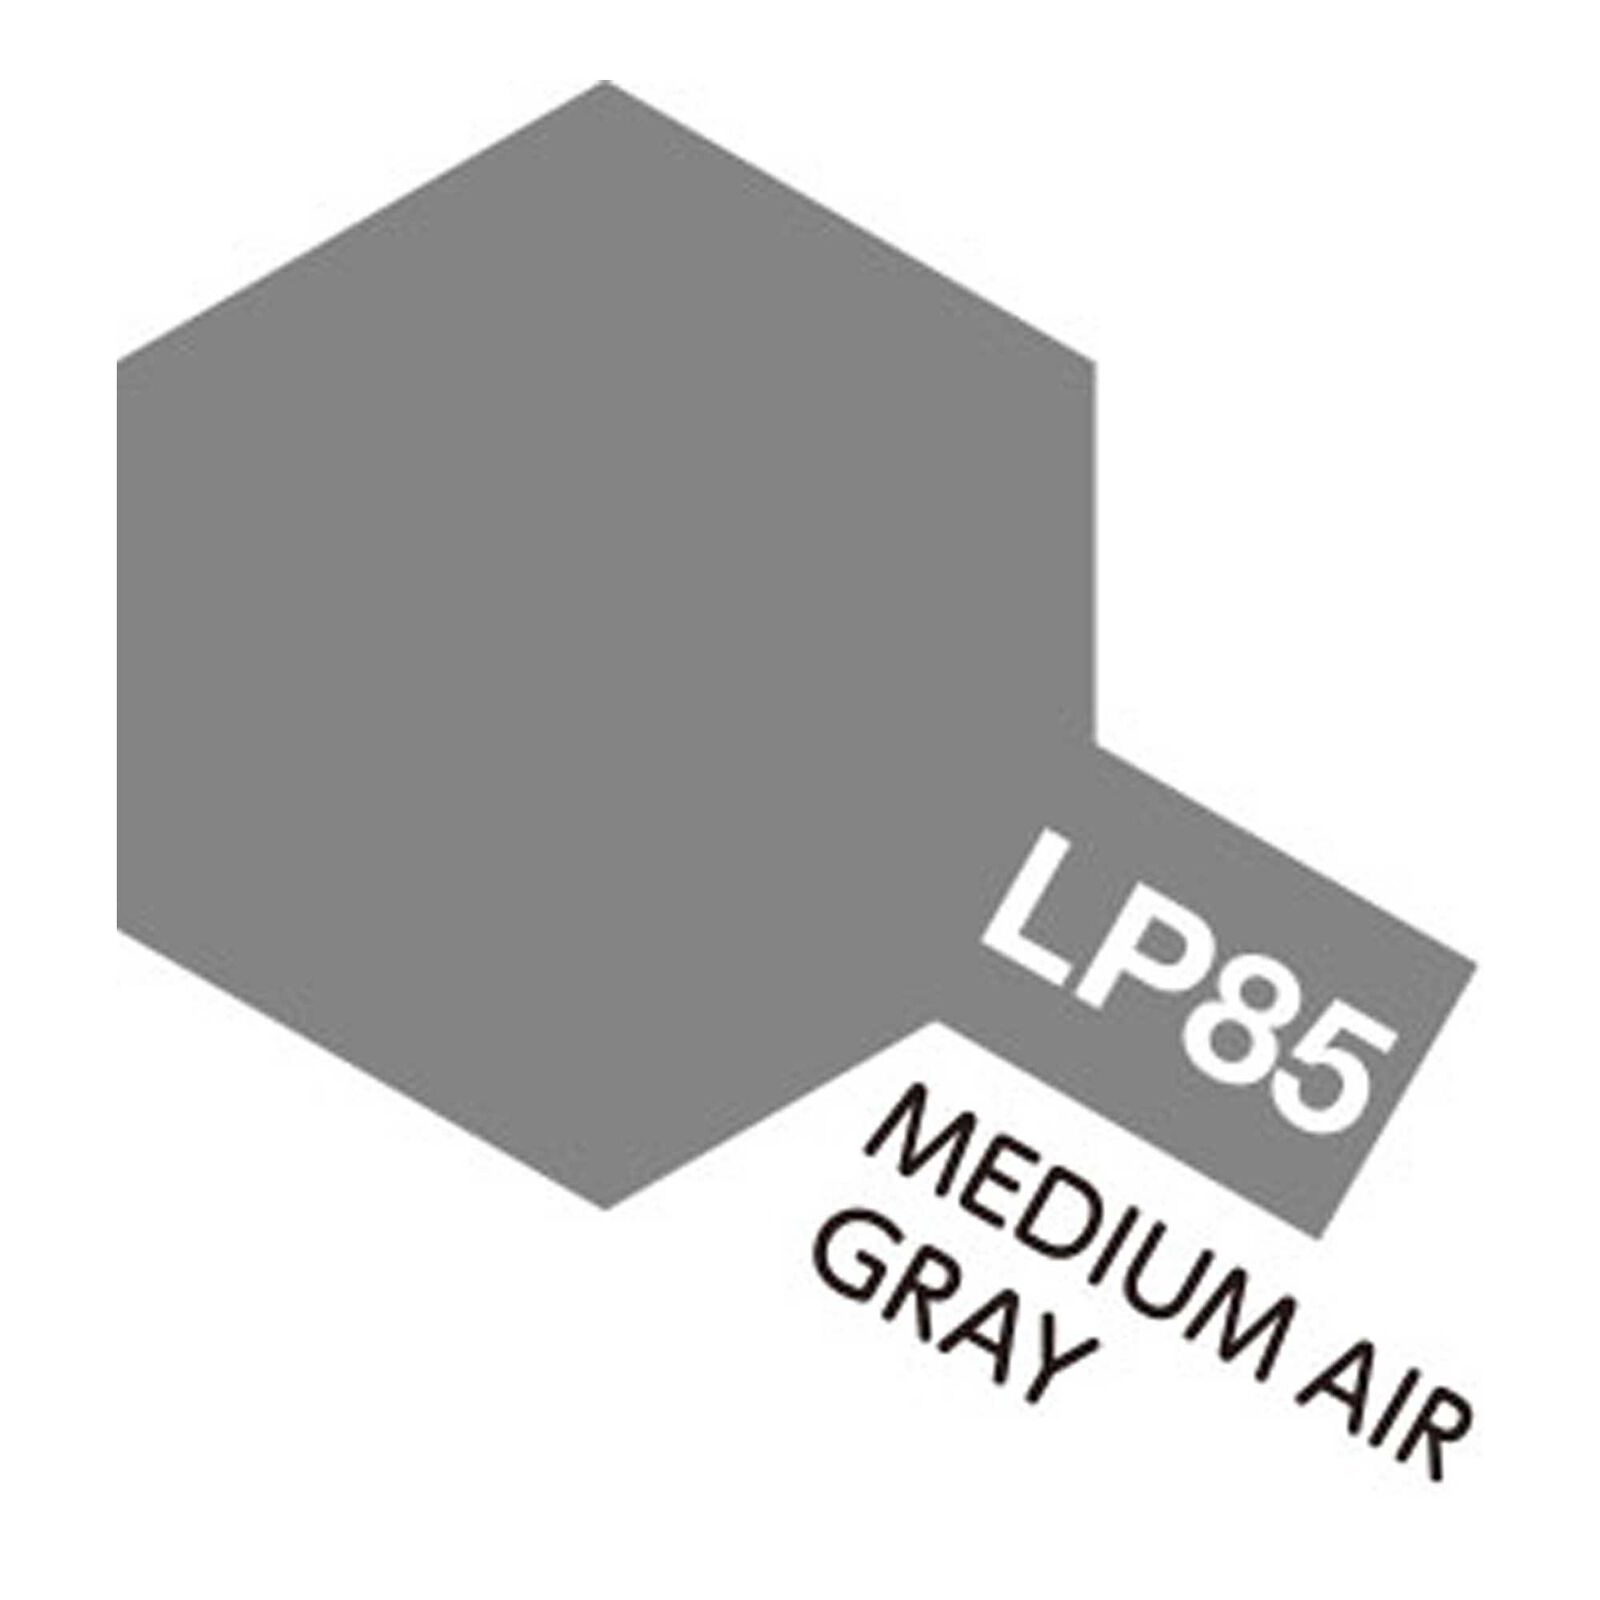 LP-85 Medium Air Gray